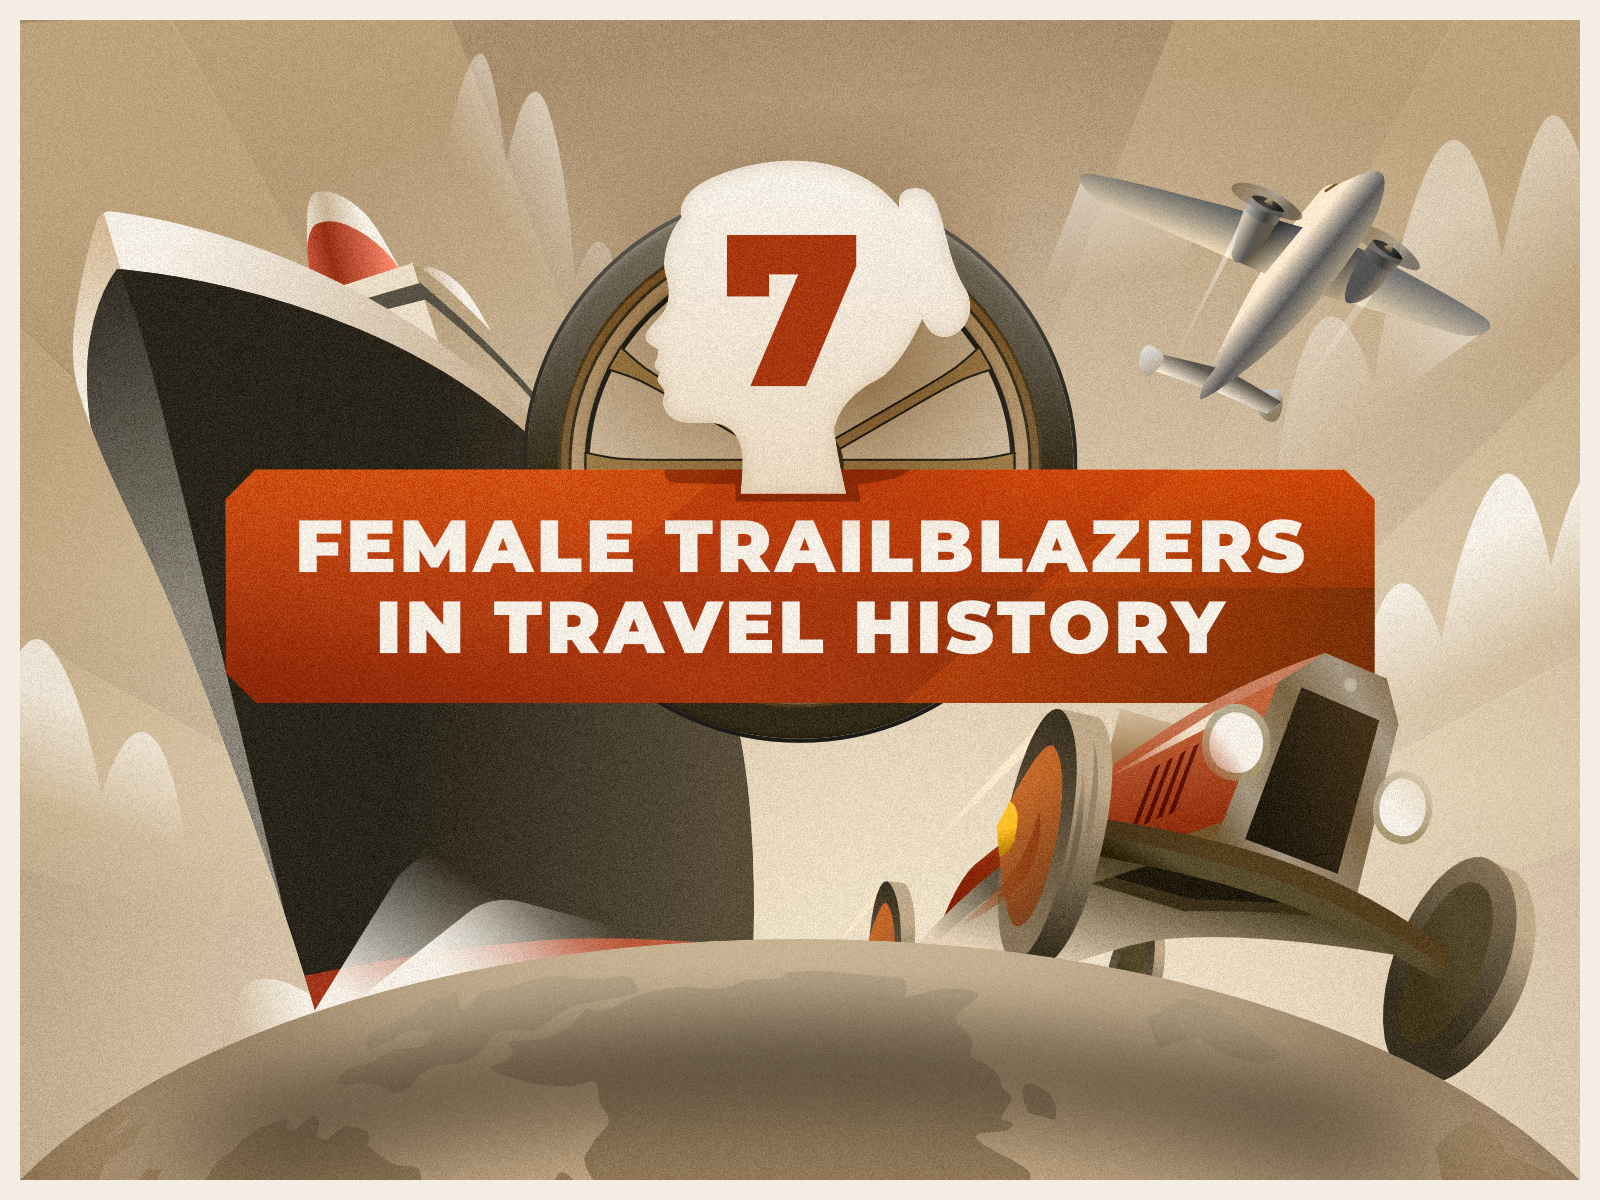 7 Female Trailblazers in Travel History - infographic header affinity deco art globe boat race airplane plane car ship design vector illustration